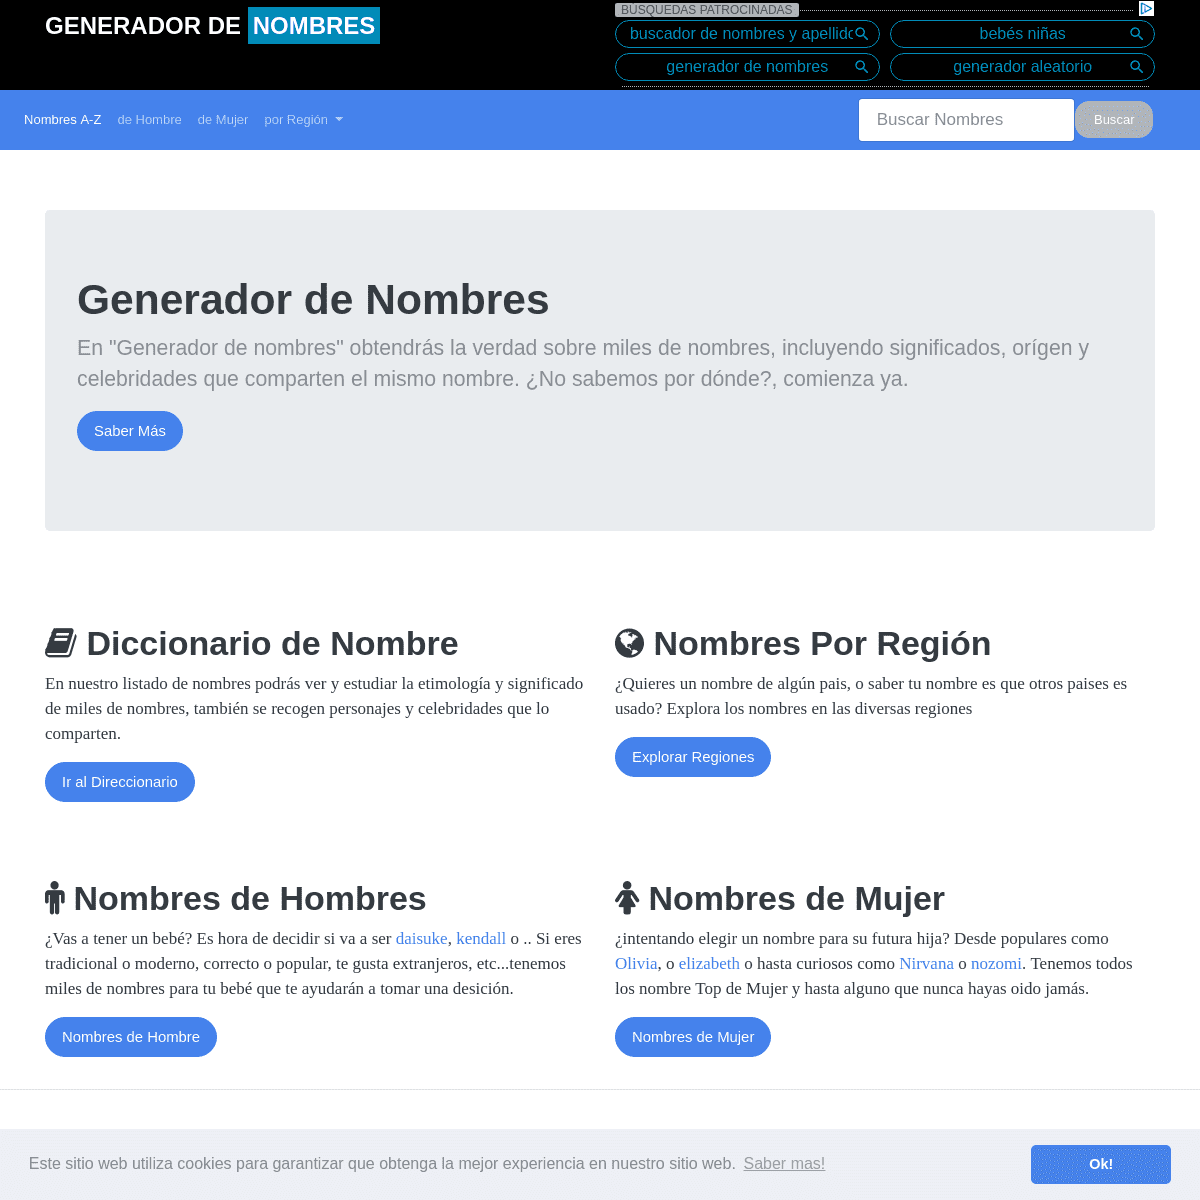 A complete backup of generadordenombres.com